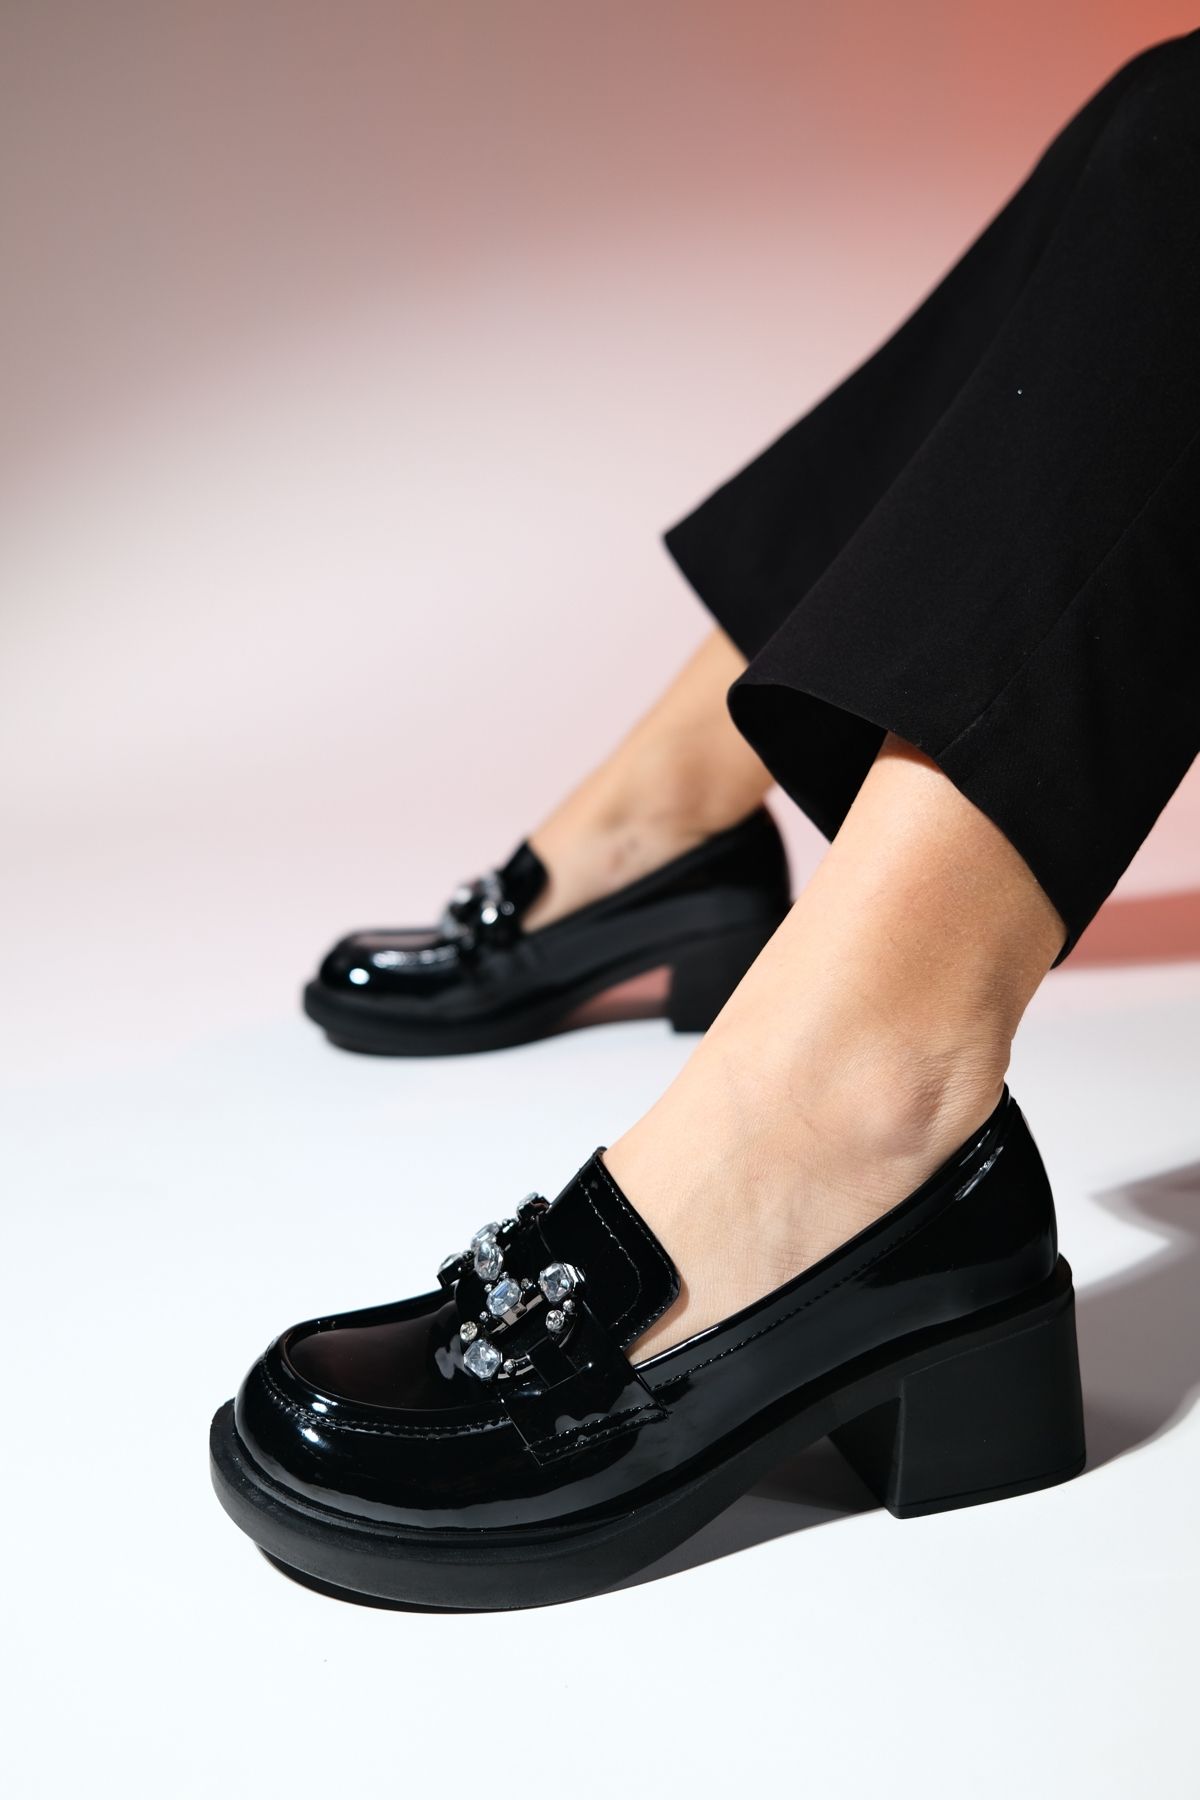 luvishoes ANGLO Siyah Rugan Taş Tokalı Kadın Kalın Topuklu Ayakkabı